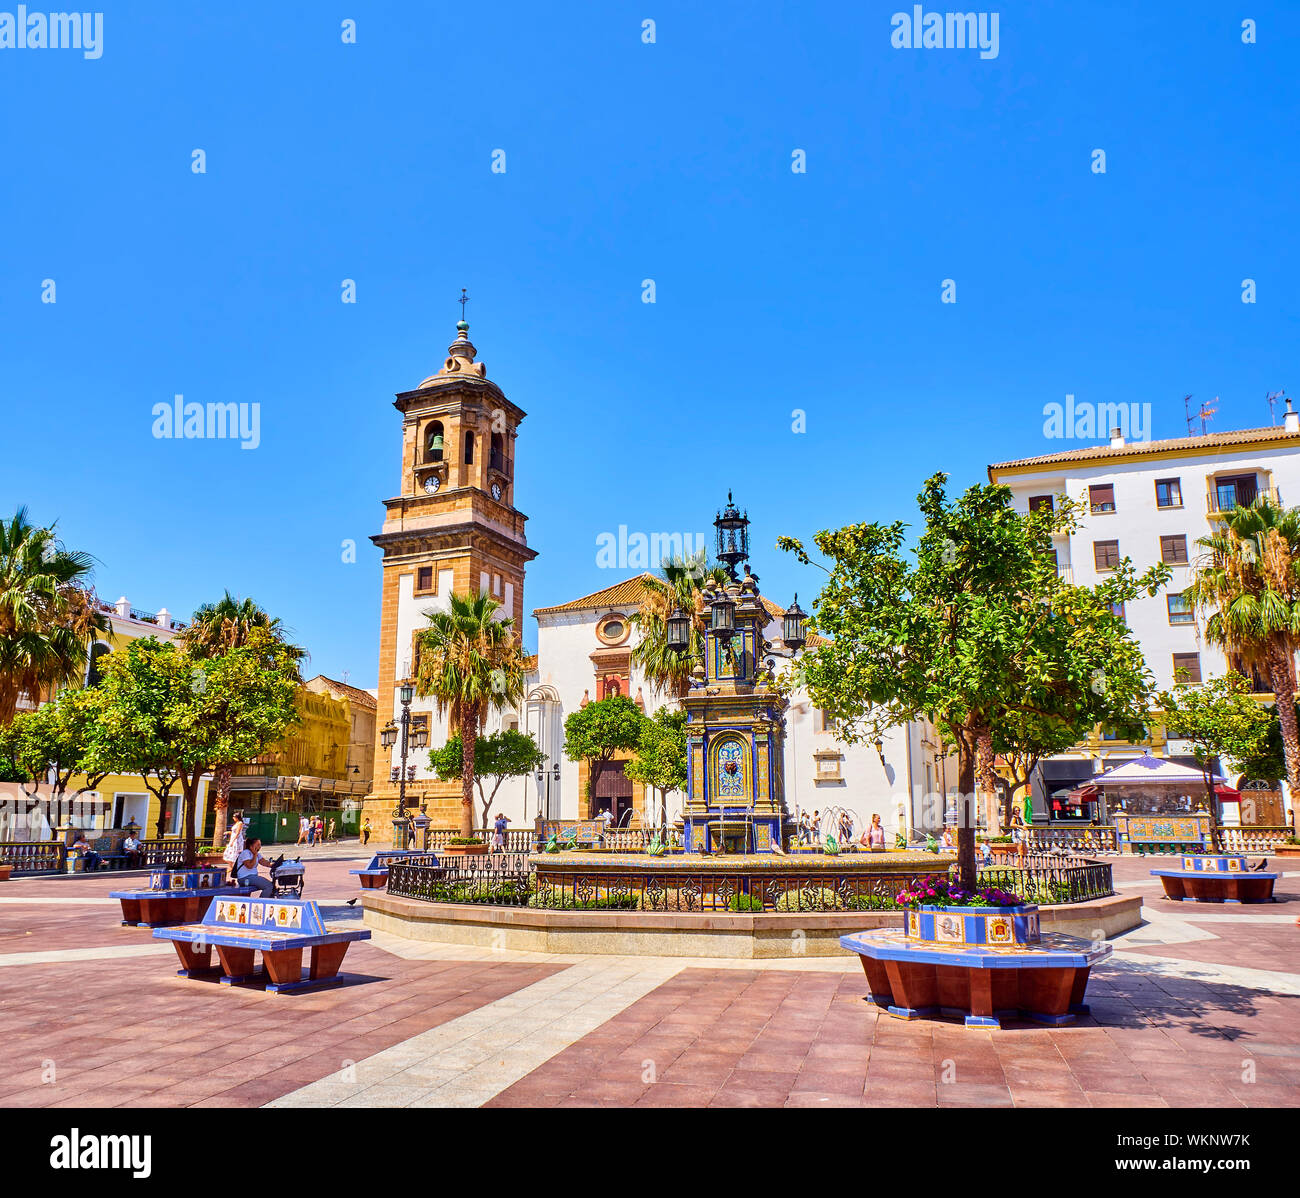 Plaza Alta Square von Algeciras, mit der Nuestra Señora de la Palma Pfarrei im Hintergrund. Algeciras, Provinz Cadiz, Andalusien, Spanien. Stockfoto